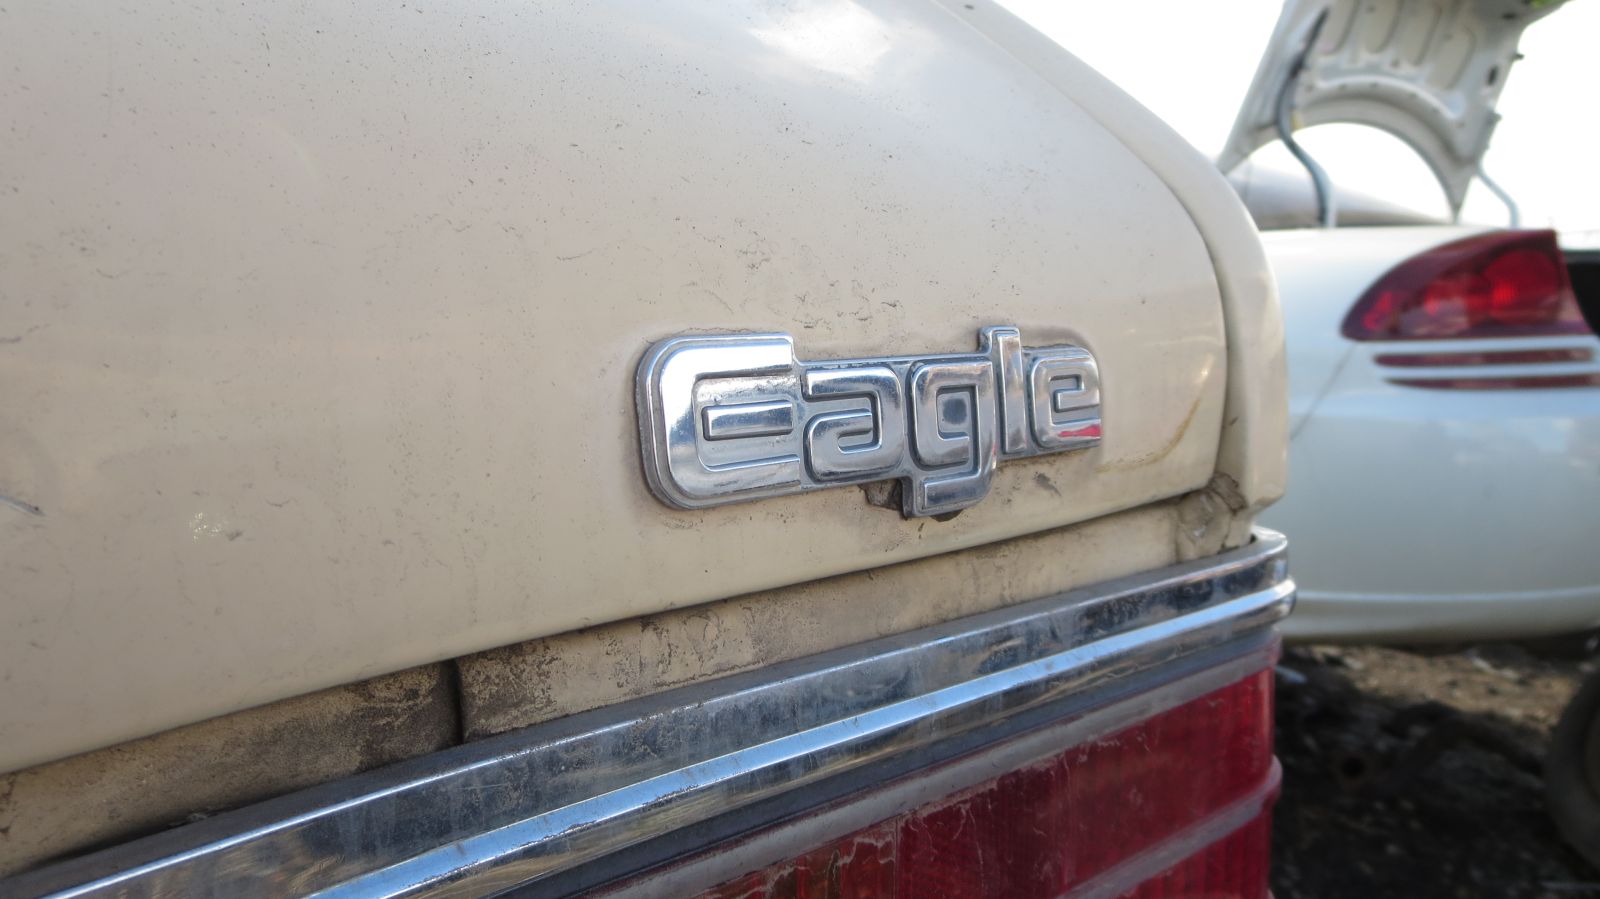 08 - 1982 AMC Eagle wagon in Colorado junkyard - photo by Murilee Martin